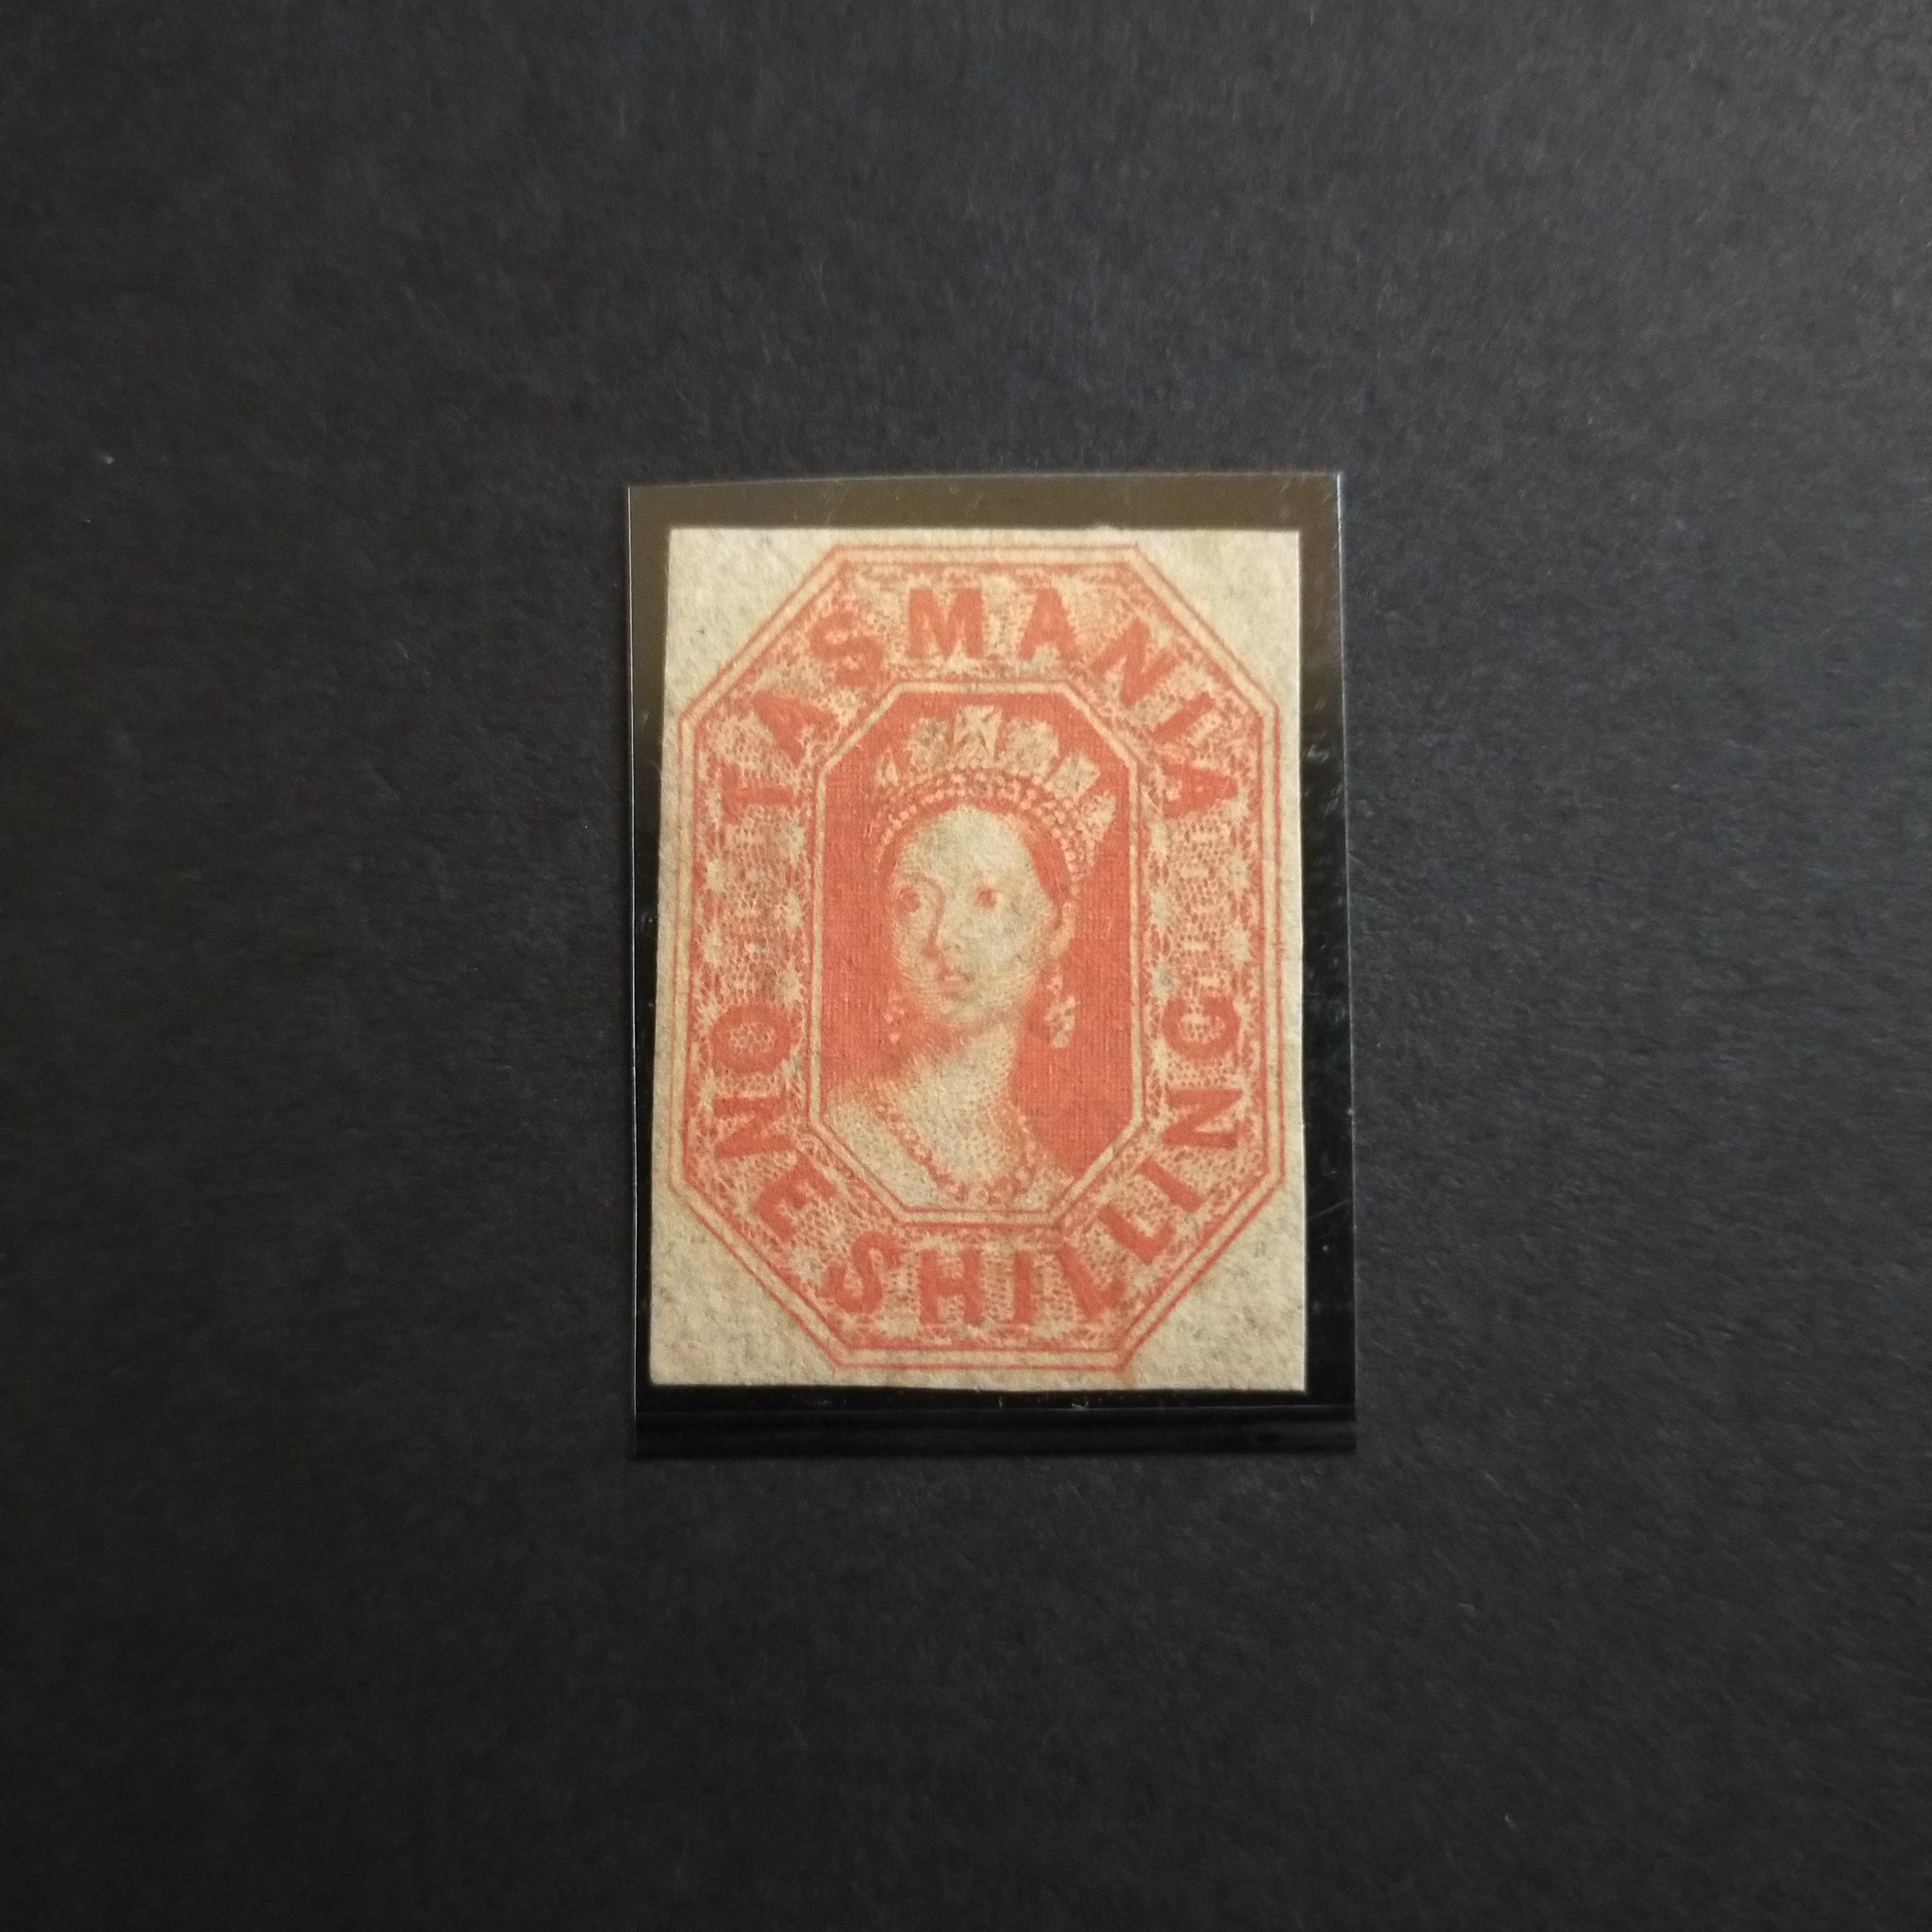 Tasmania 1858 Watermark Double-Lined Numerals Imperf 1/- Vermilion Part Original Gum With RPSL Certificate SG 41